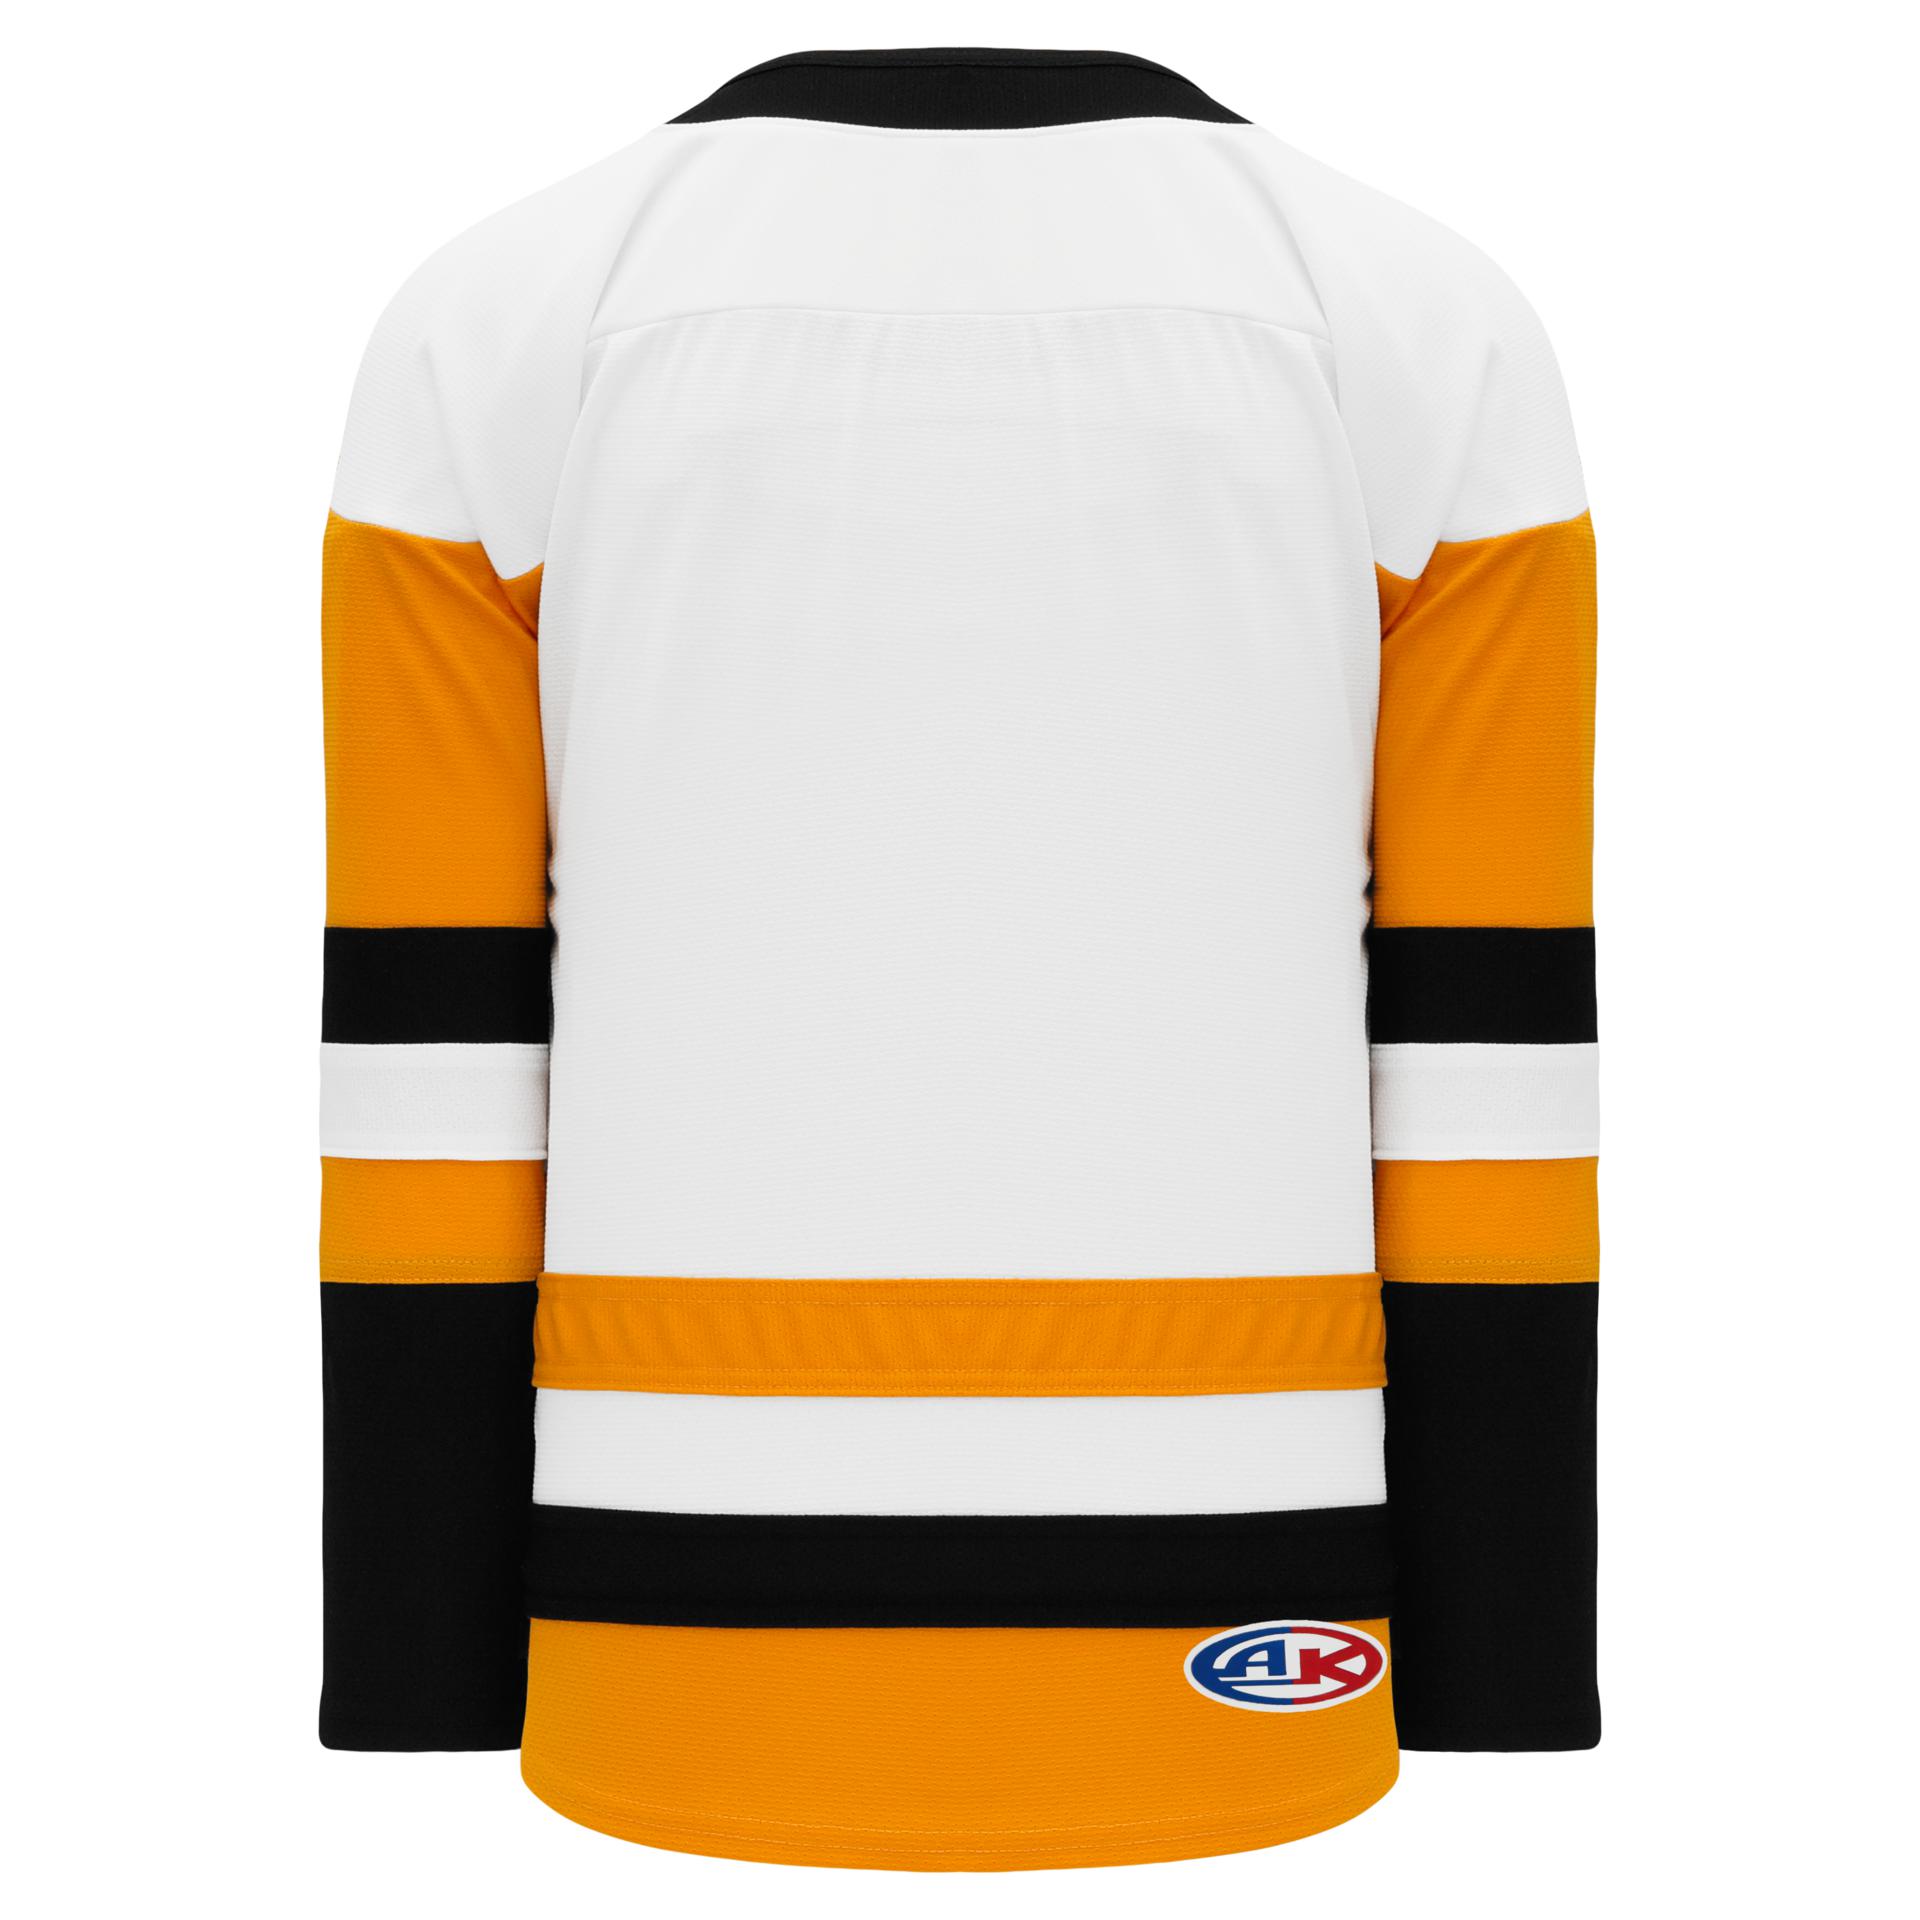 pittsburgh penguins jersey sweatshirt